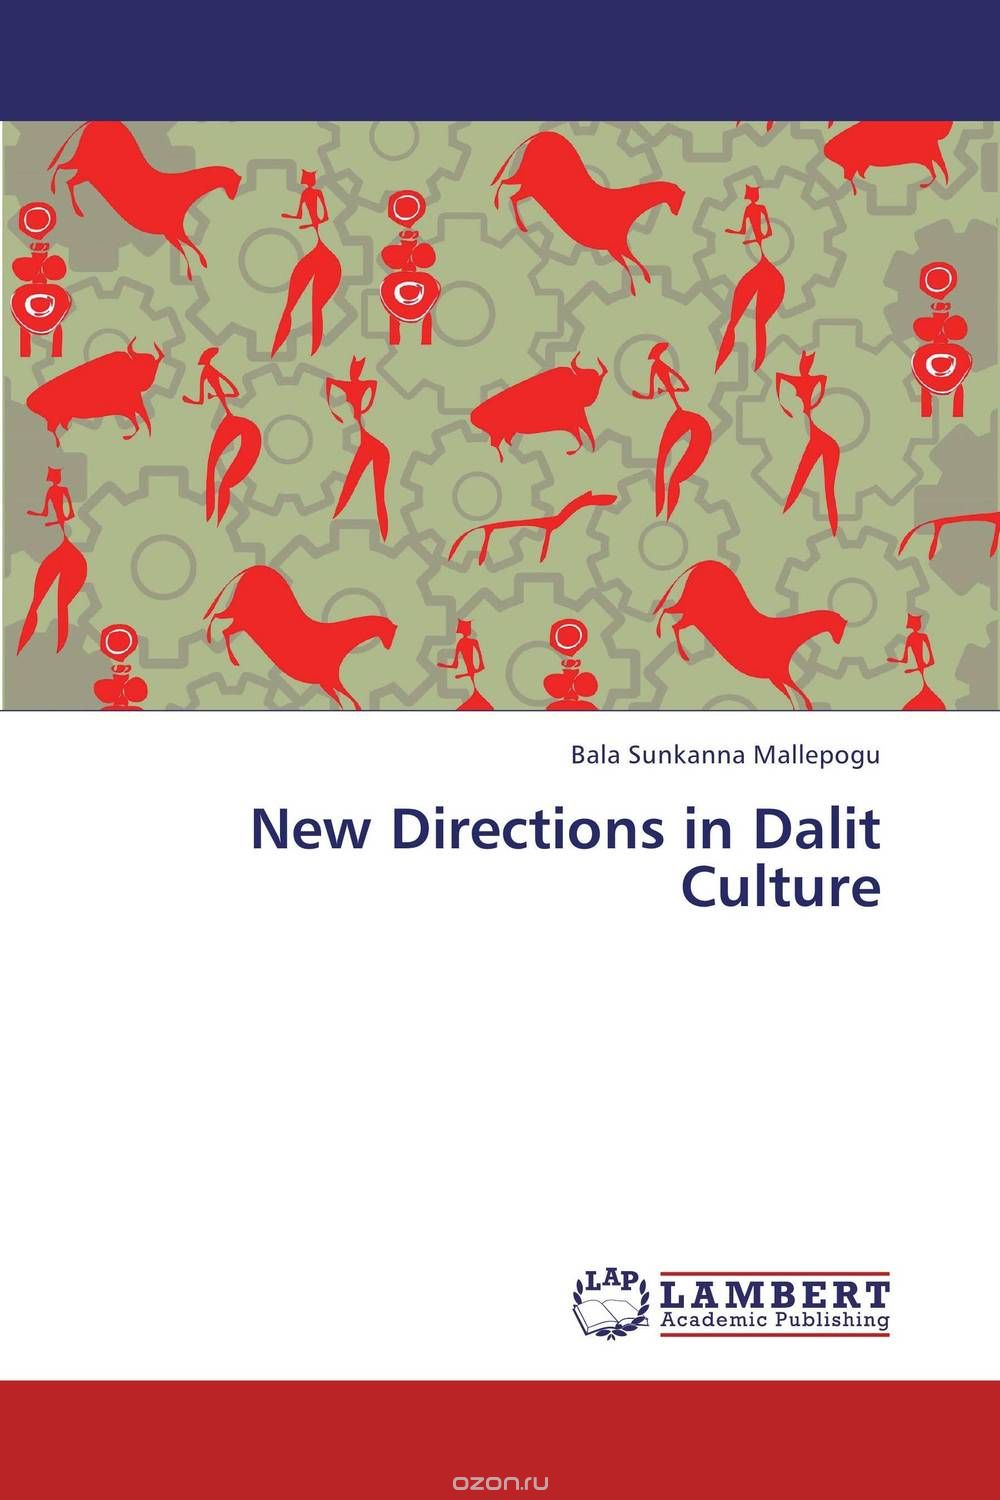 Скачать книгу "New Directions in Dalit Culture"